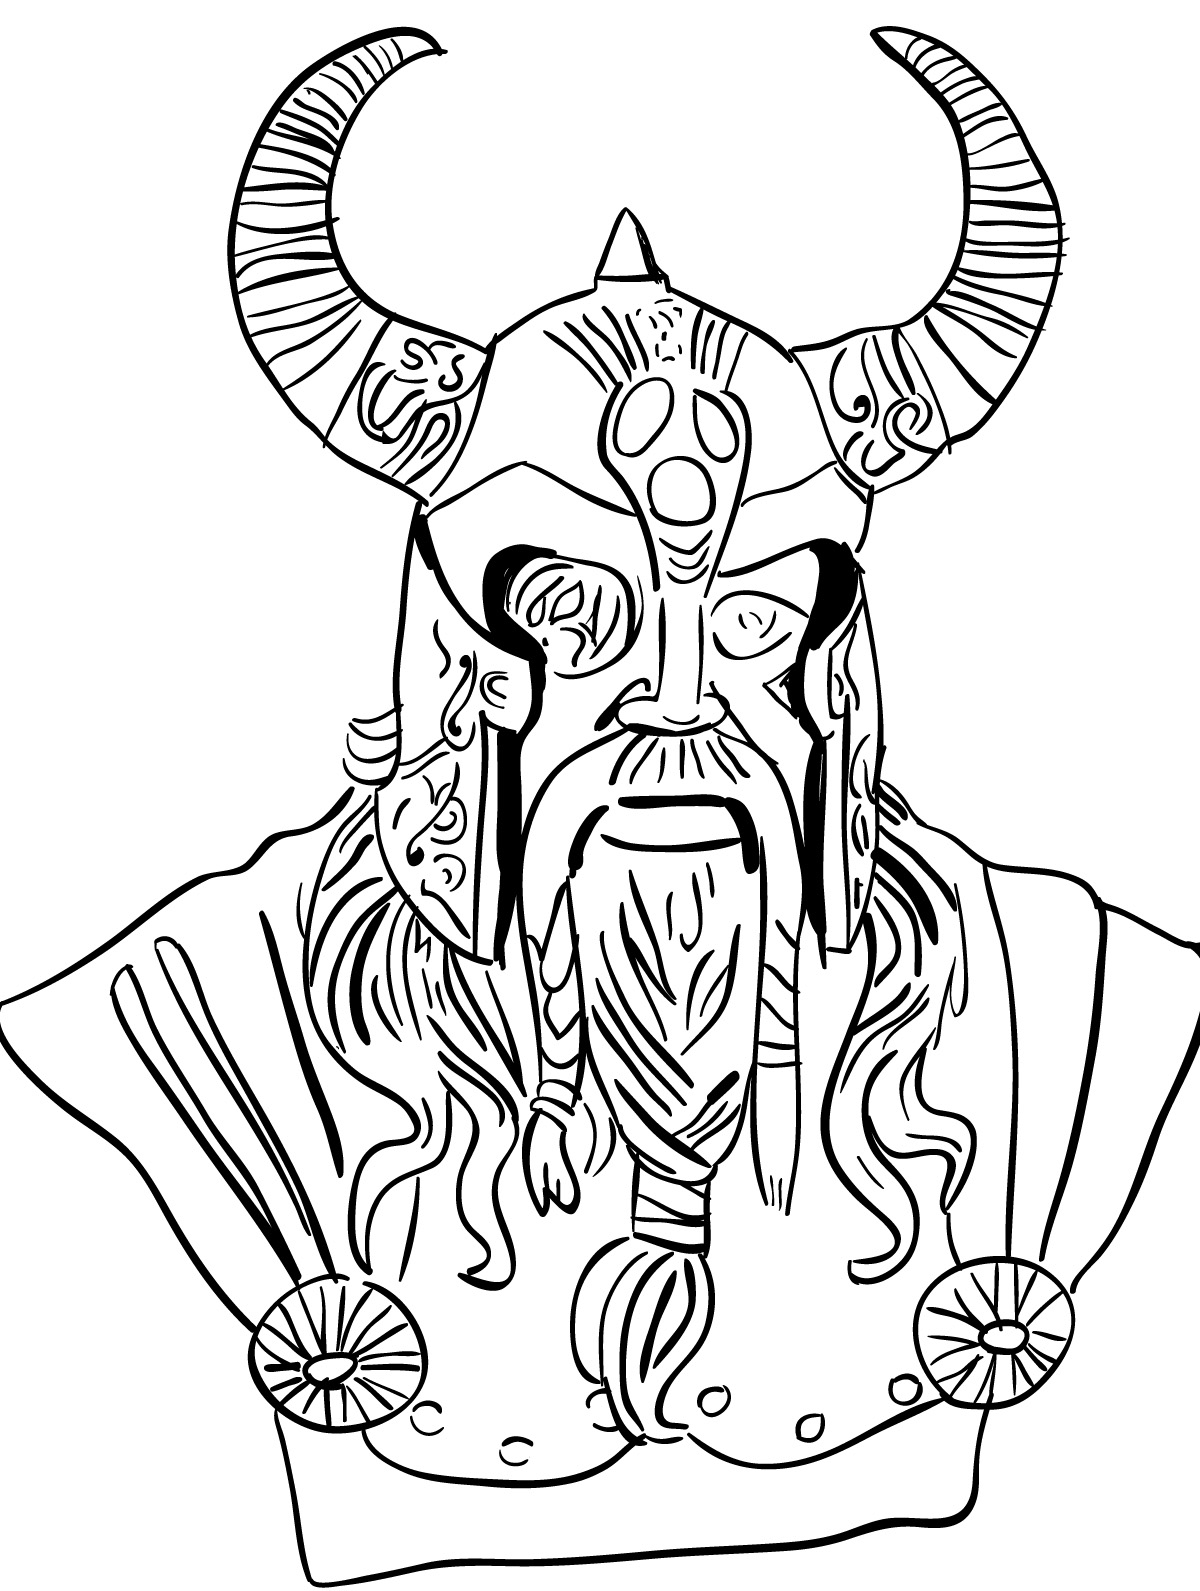 Viking - Illustrator Trace Drawing by Colasik on DeviantArt